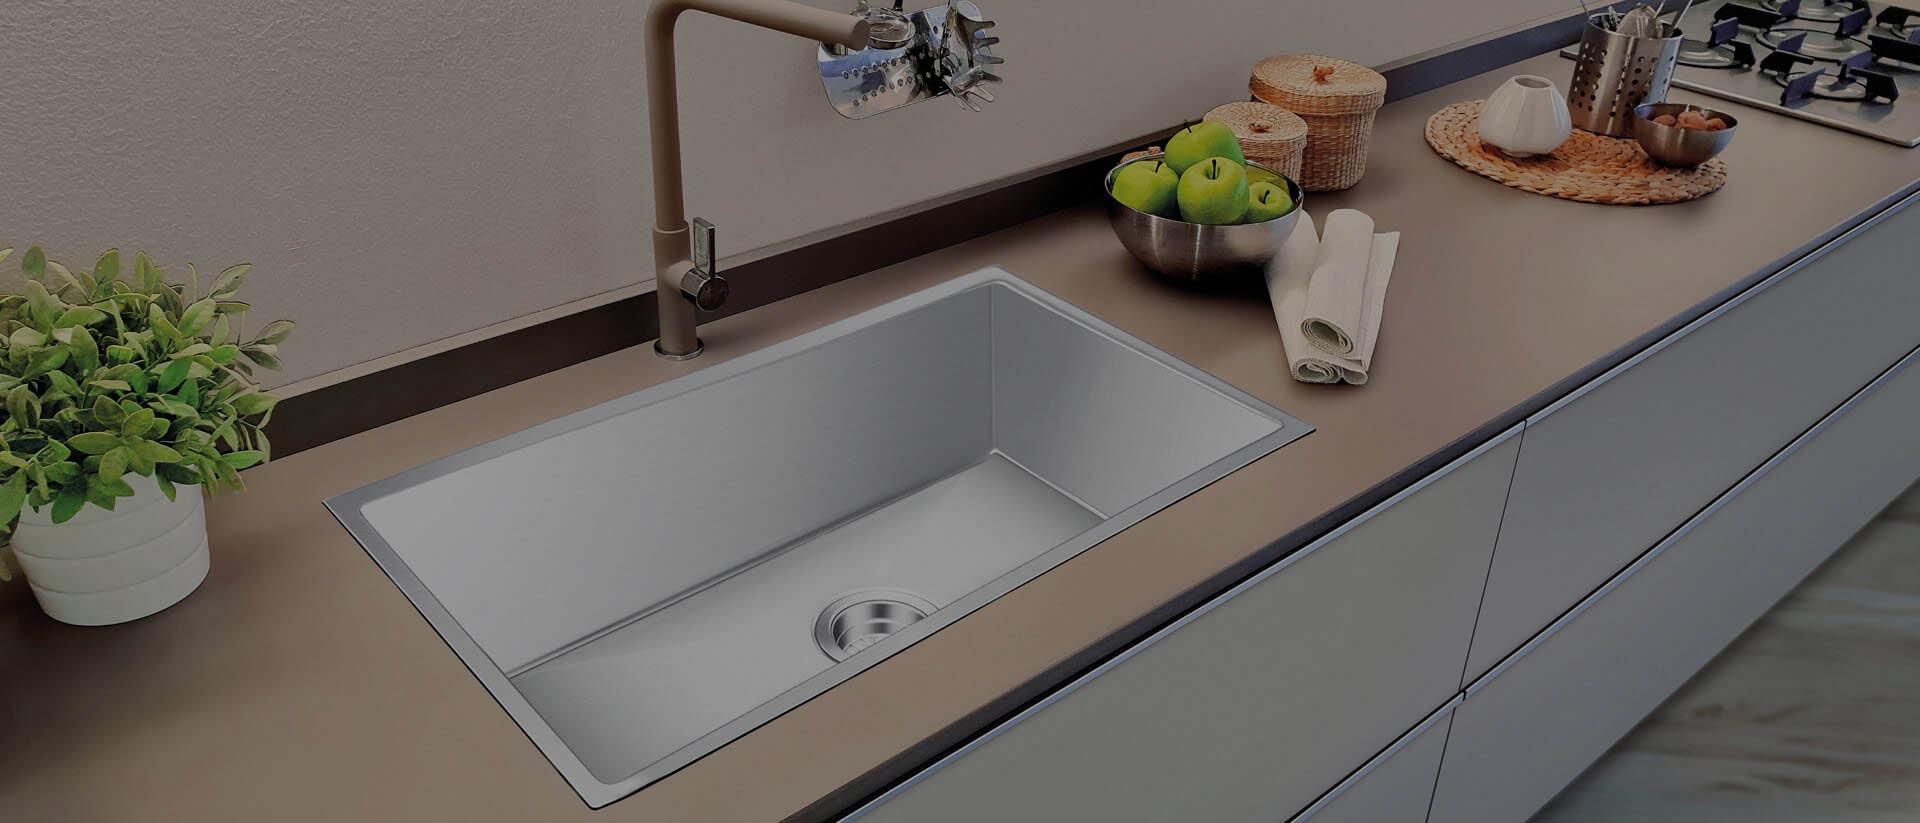 nirali kitchen sink dimensions